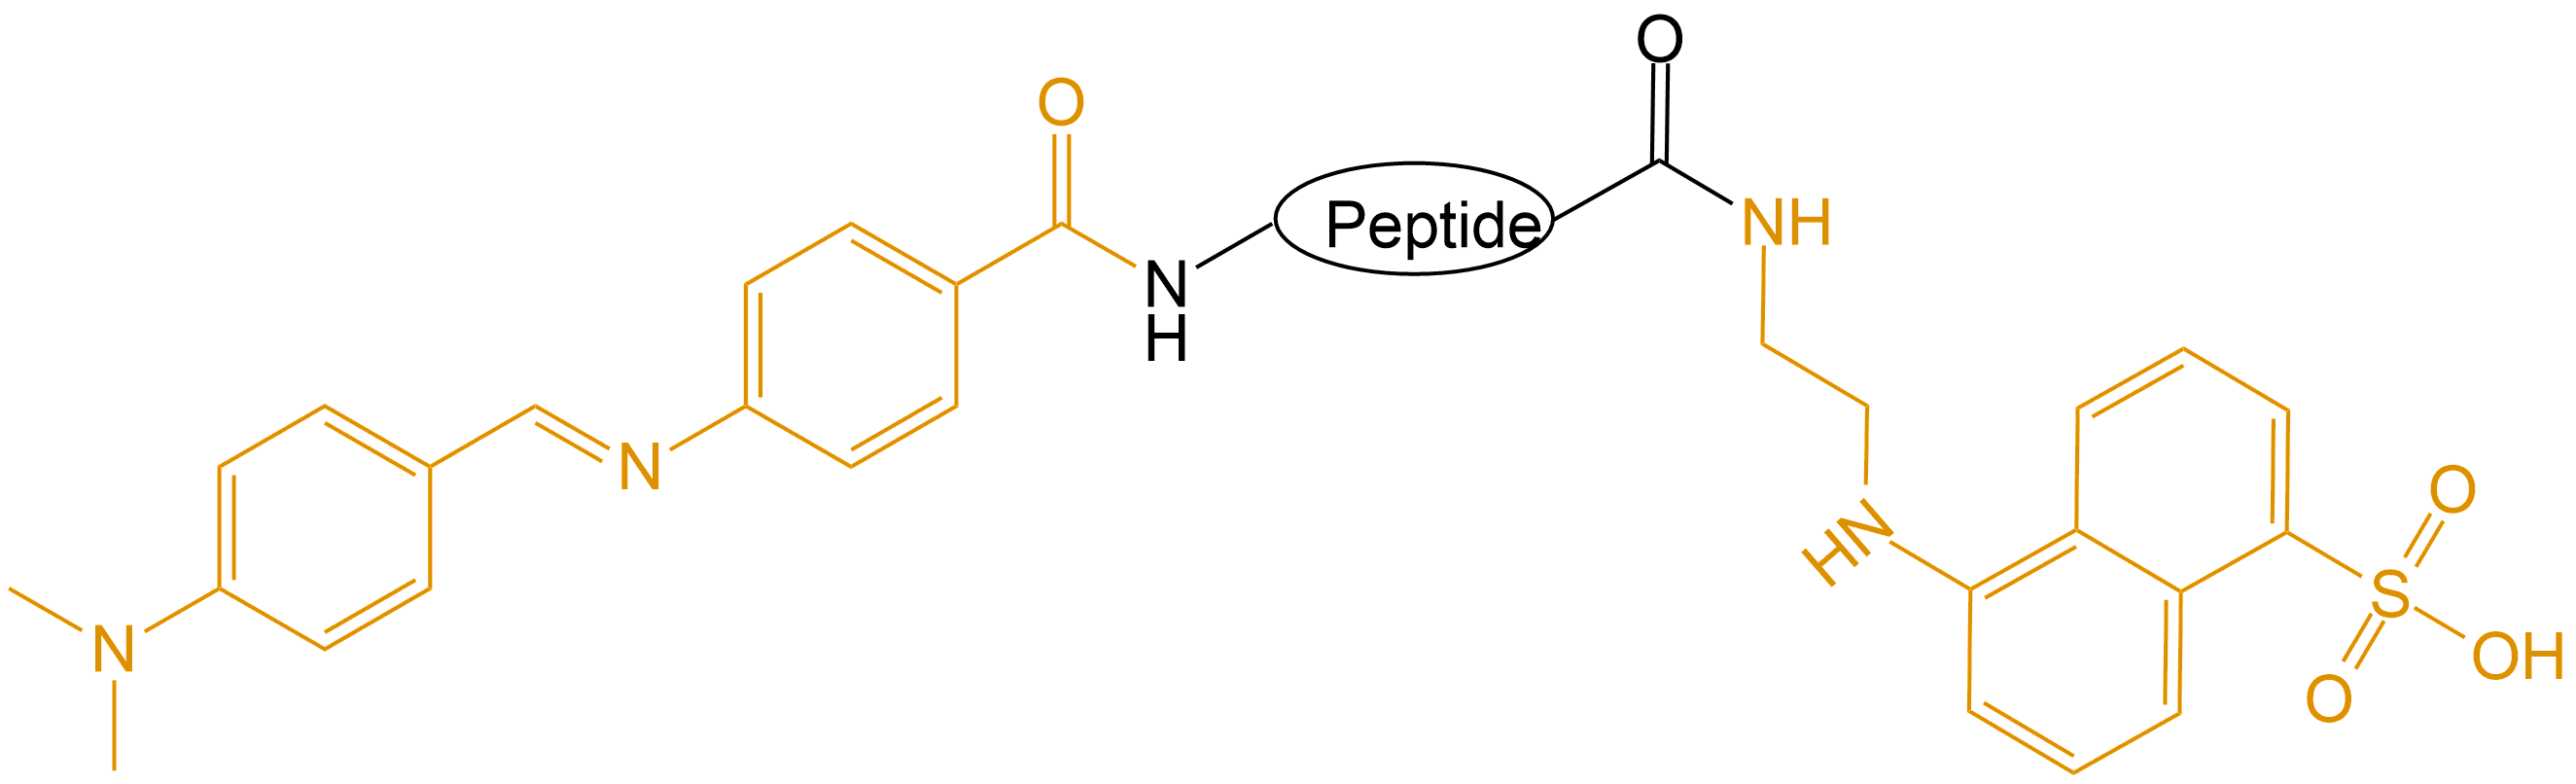 DABCYL和EDANS双标记(专肽生物www.allpeptide.com)